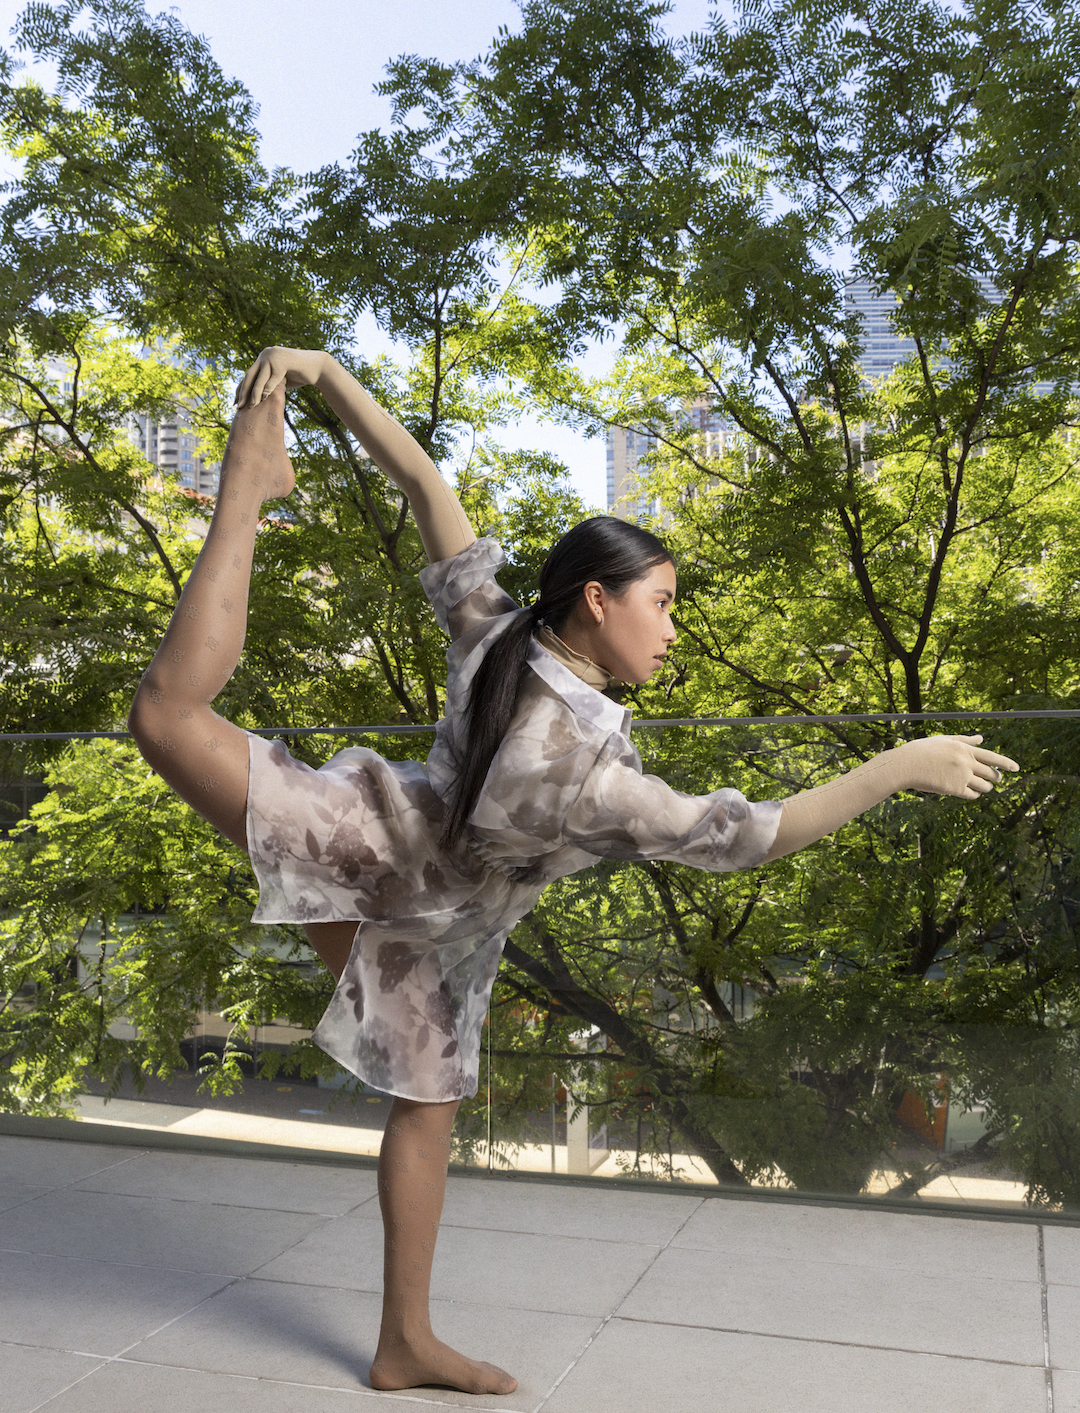 A dancer wearing Fendi attire poses outside on one leg